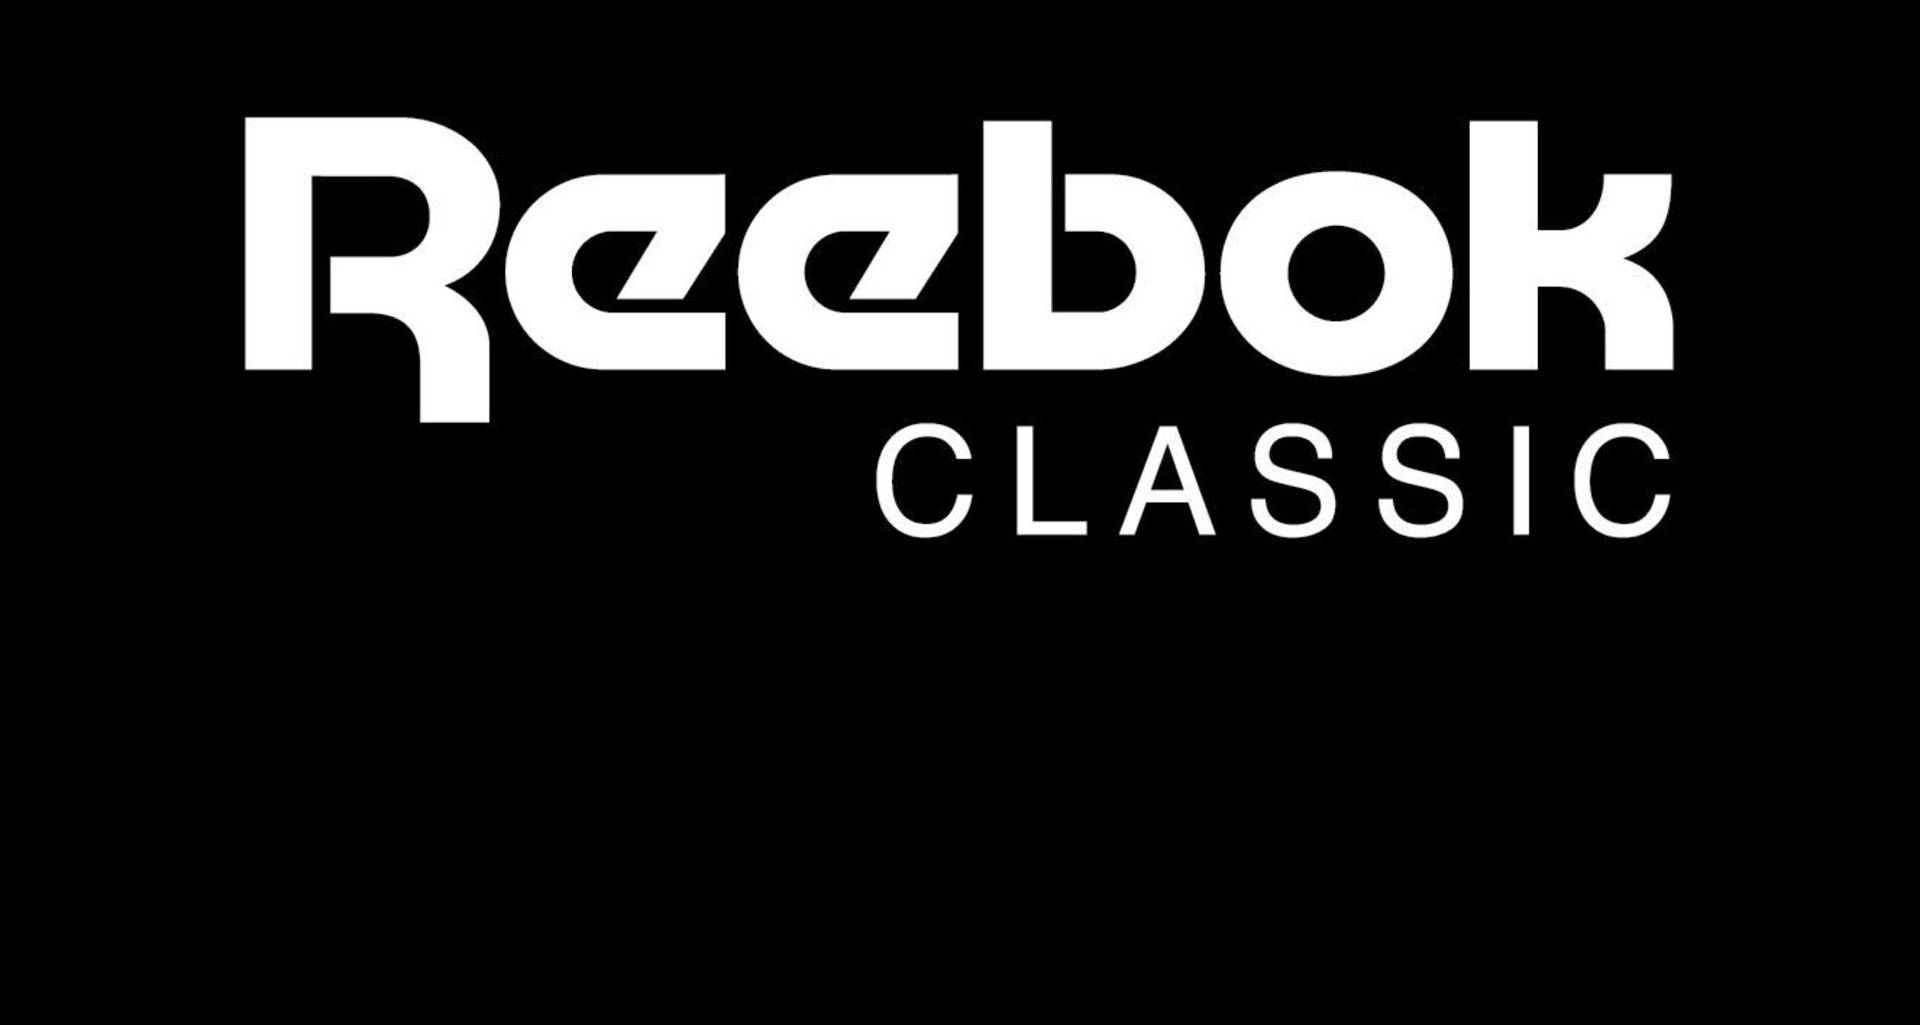 Reebok Classic Black Background